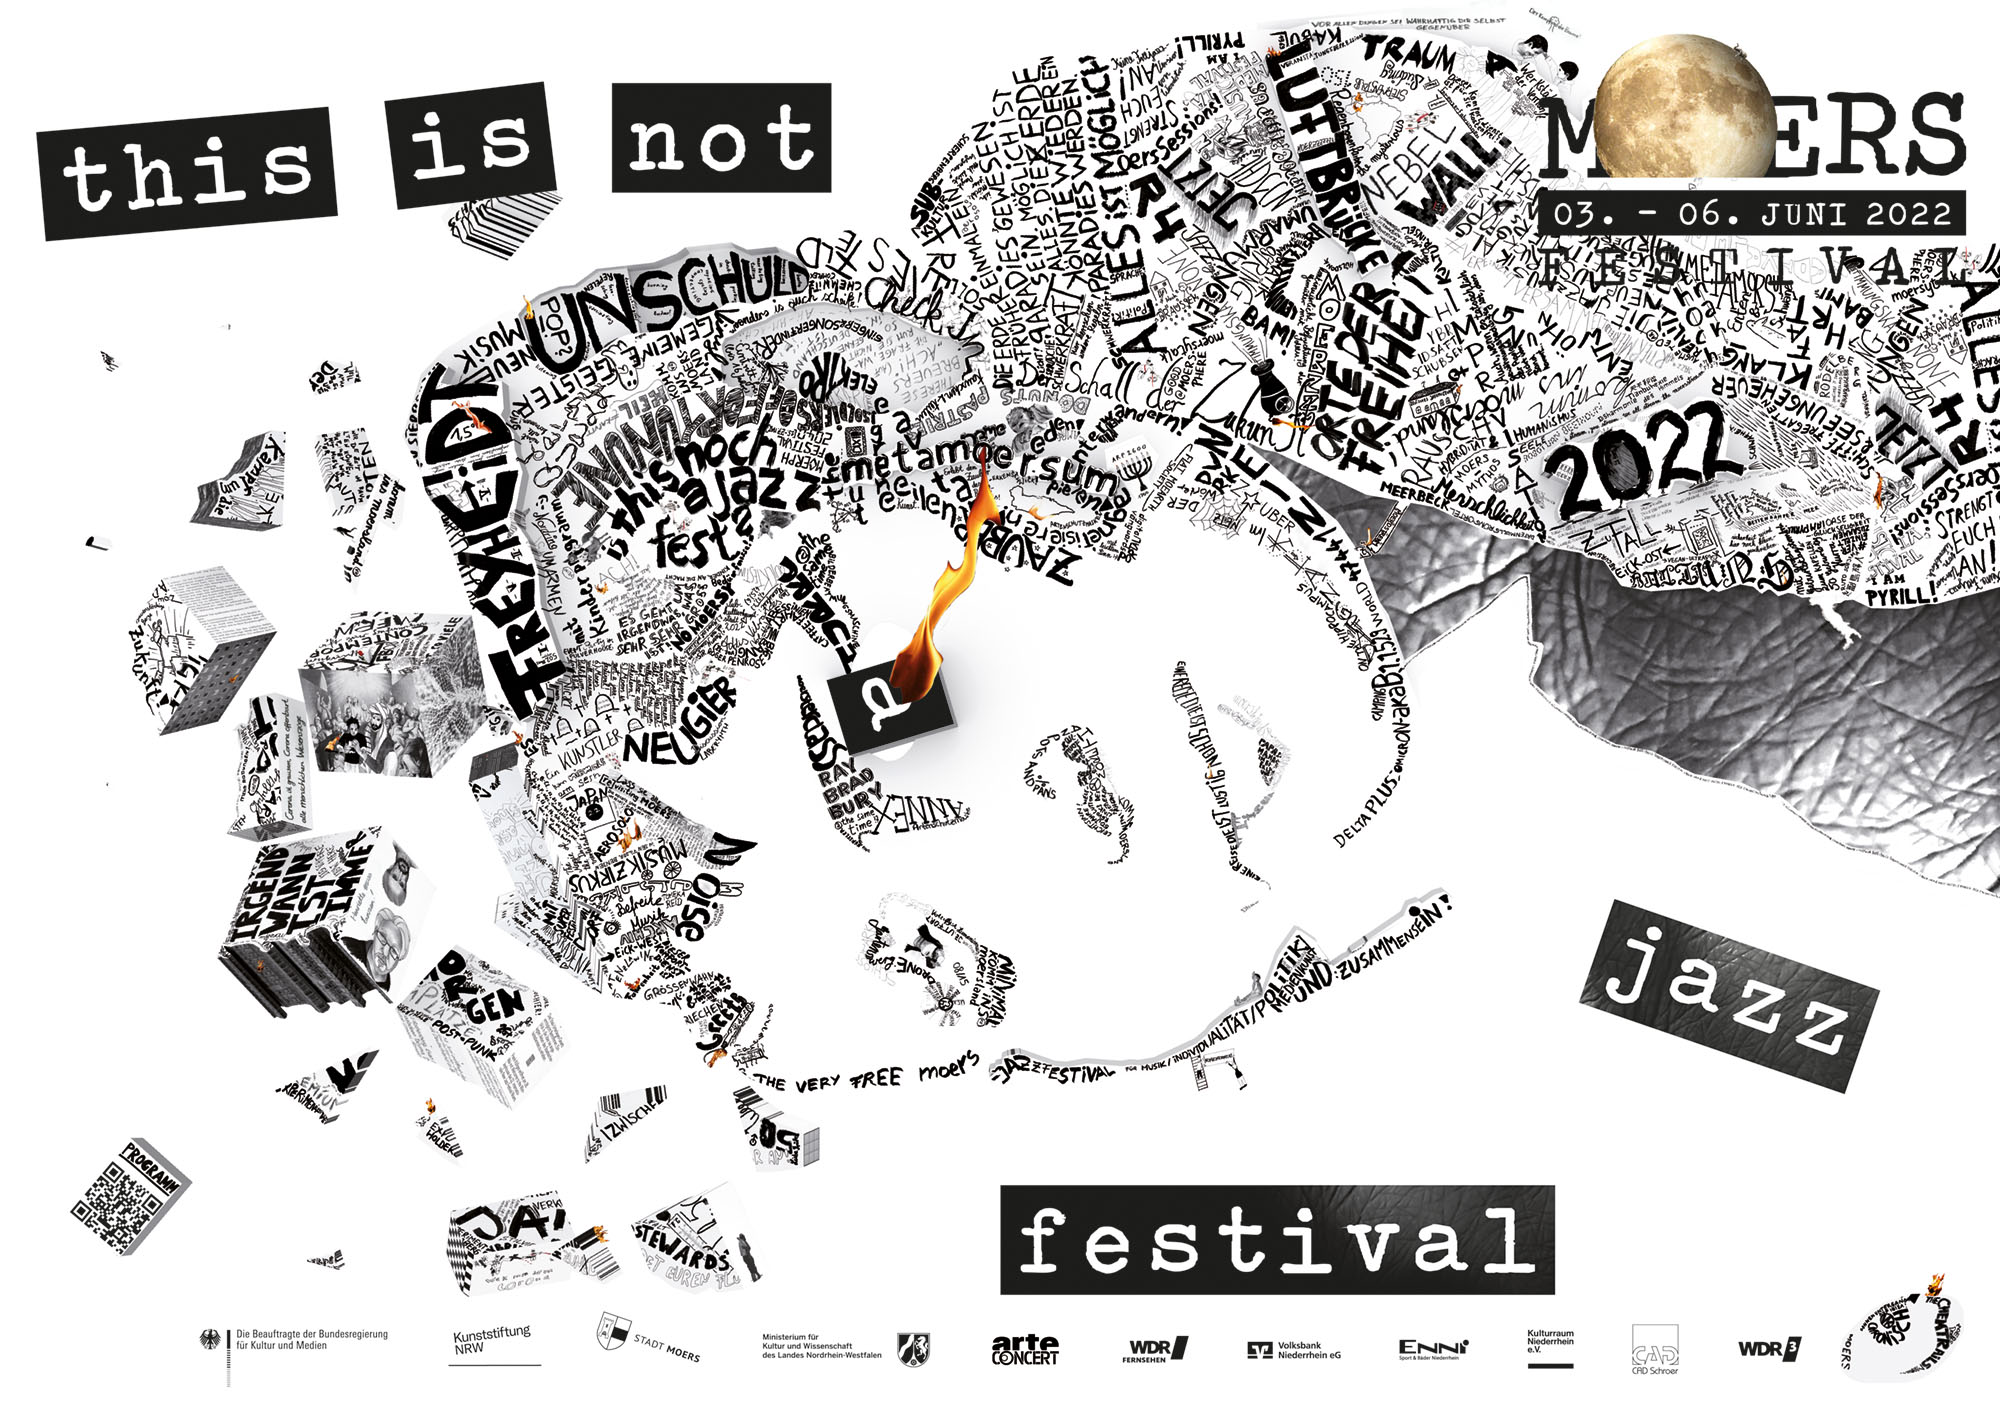 moers festival plakat 2022